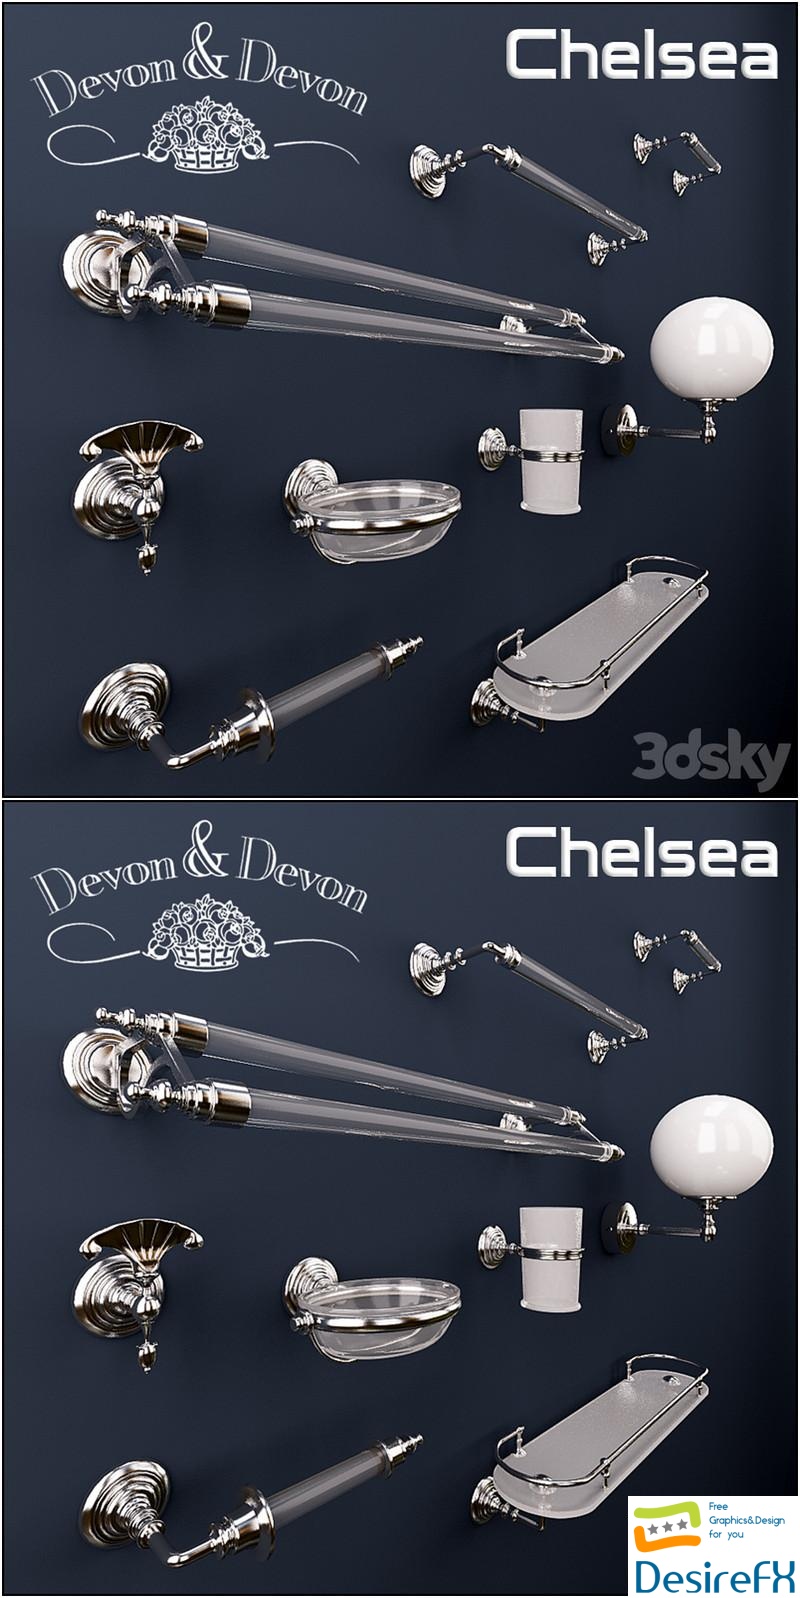 Devon&Devon Chelsea 3D Model